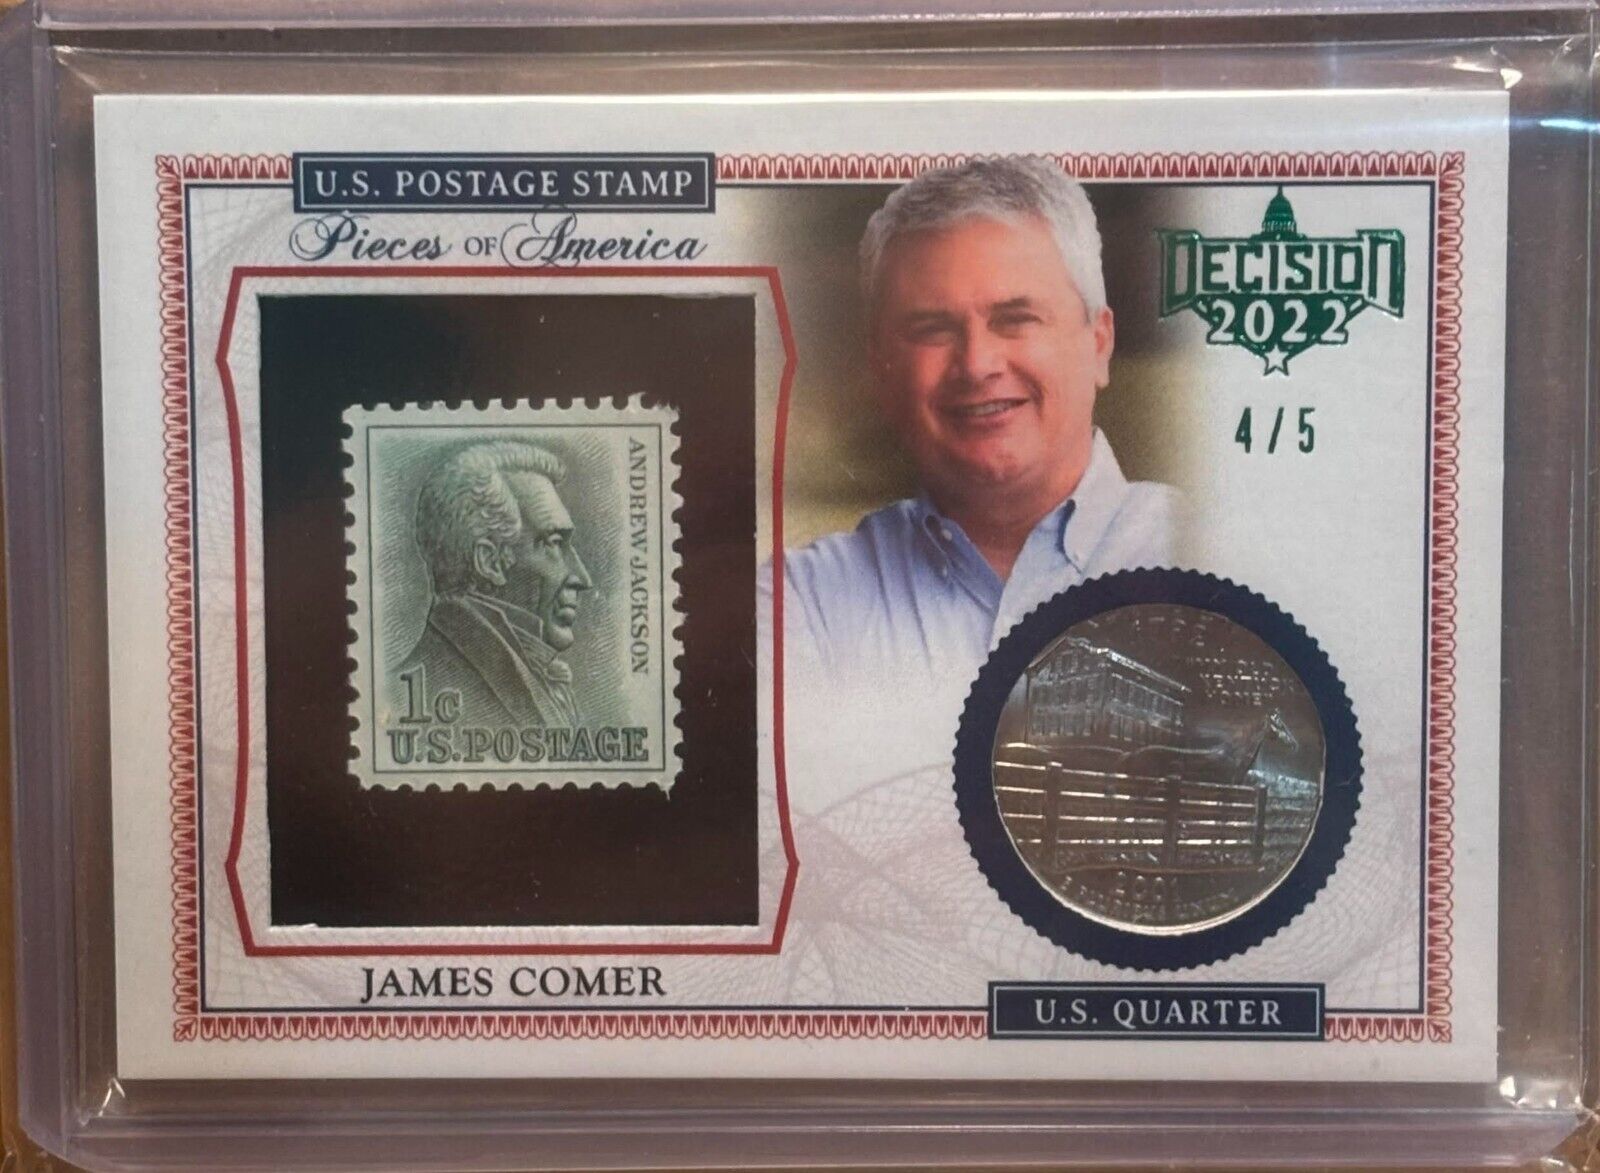 REP. JAMES COMER 2022 DECISION #D 4/5 STAMP/QUARTER COIN CARD RELIC REPUBLICAN